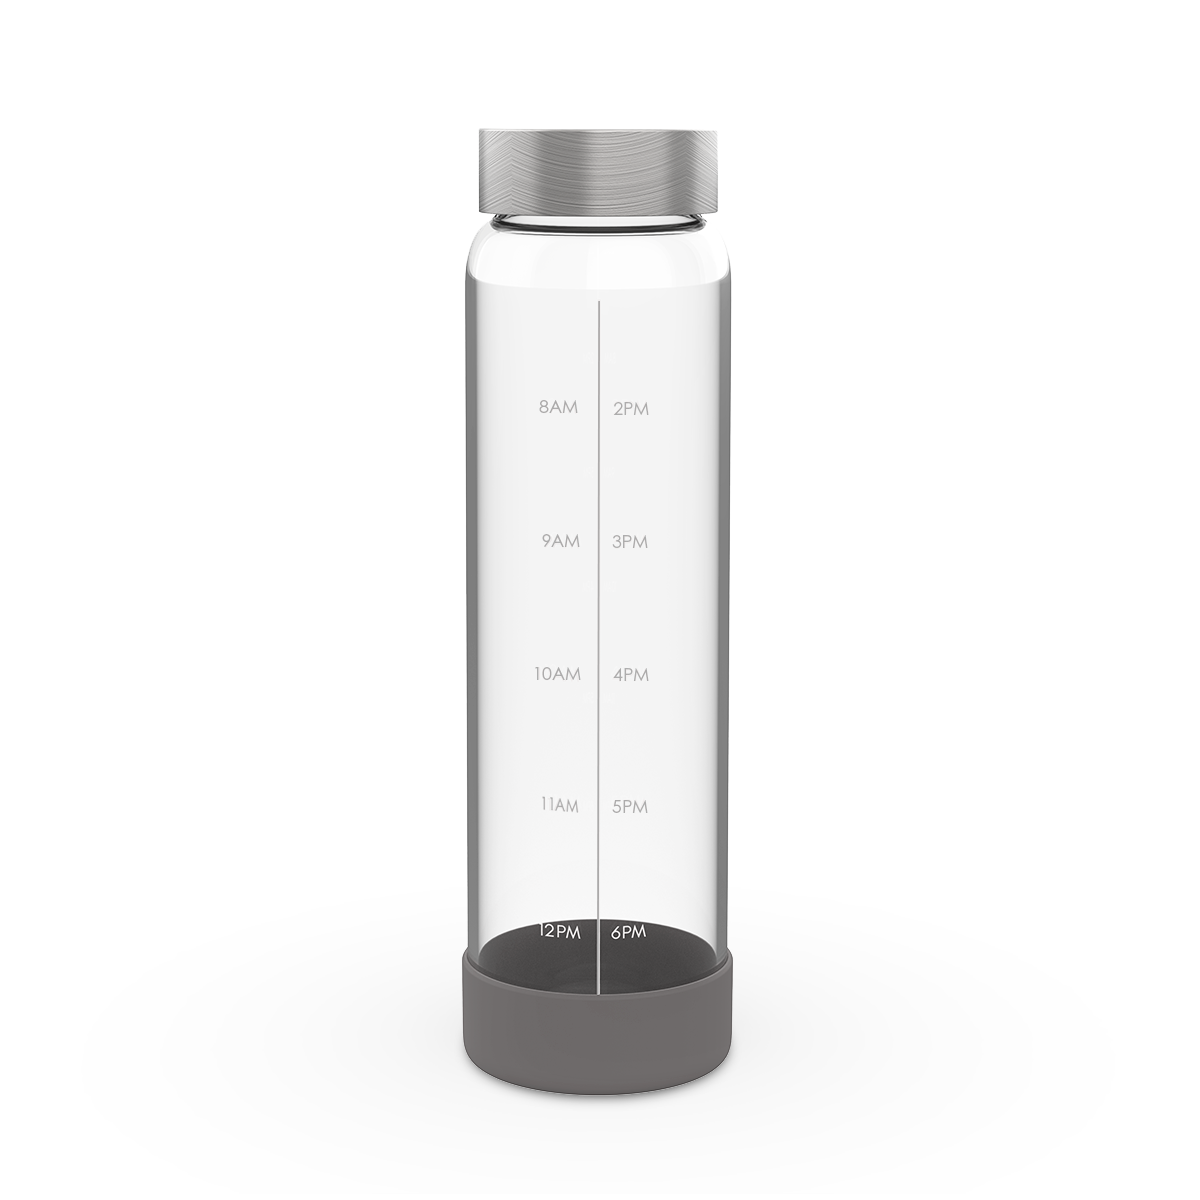 18.5oz Glass Water Bottles